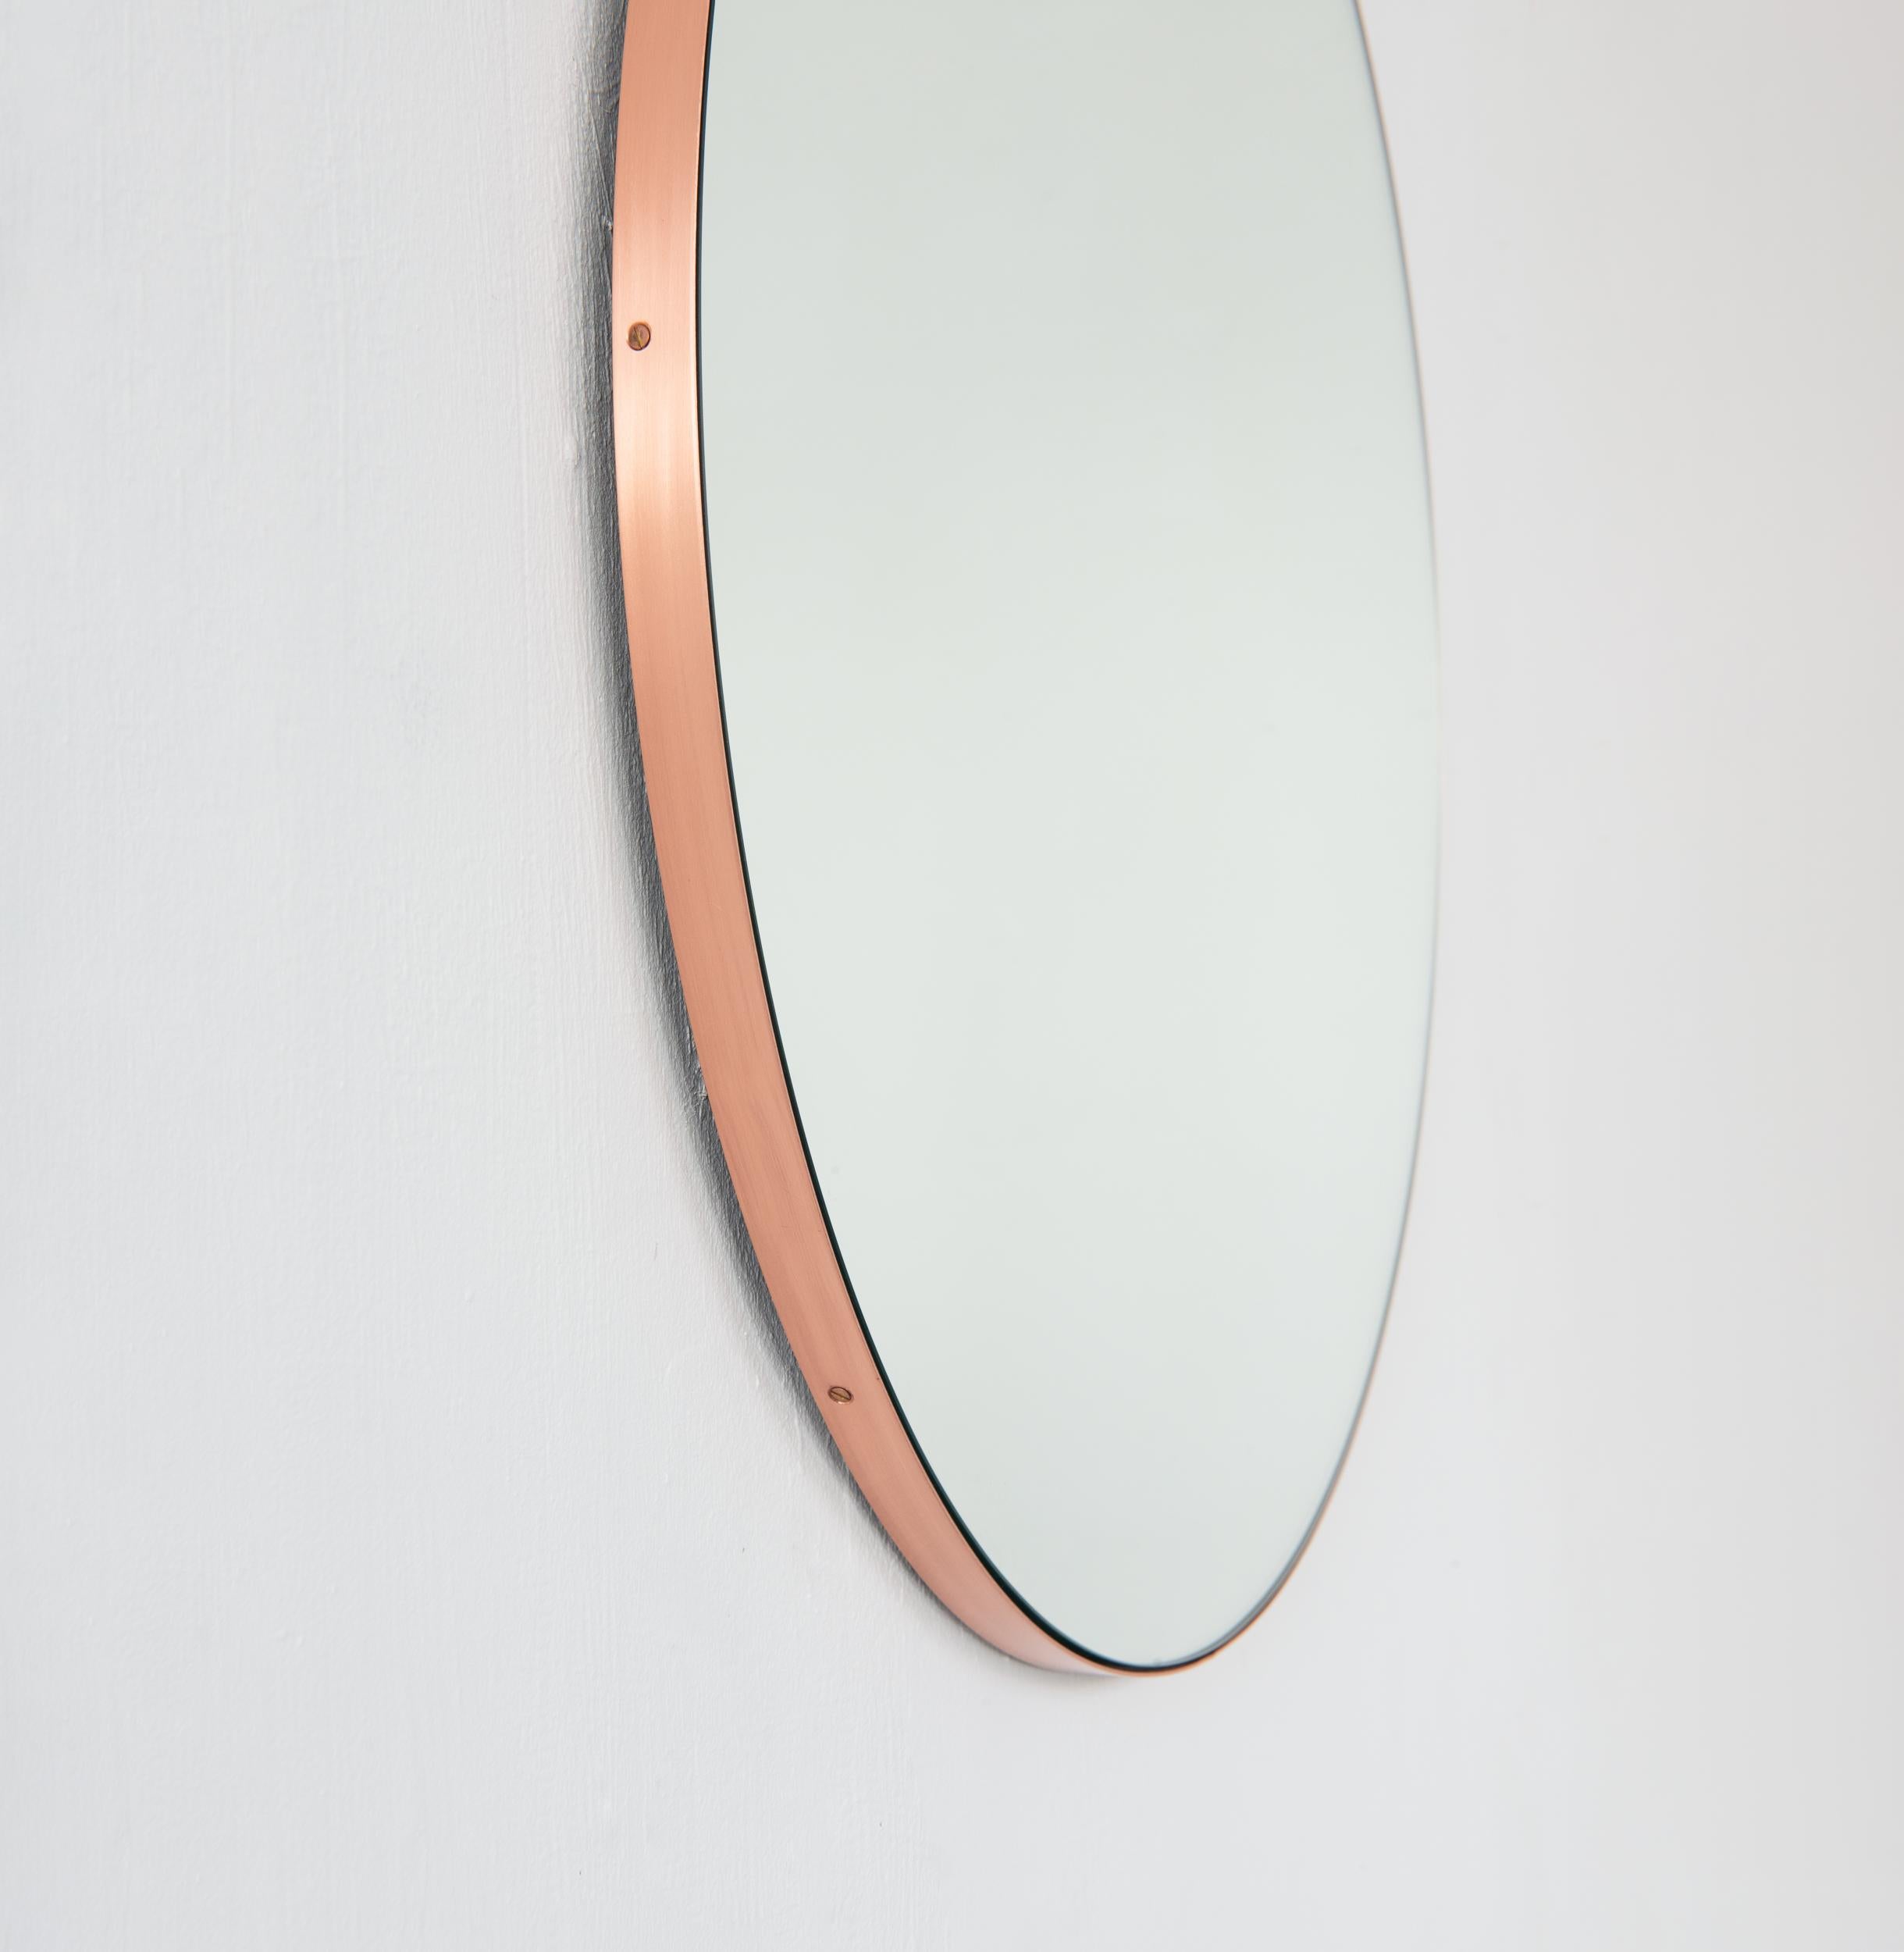 British Orbis Round Contemporary Mirror with Copper Frame, Medium For Sale